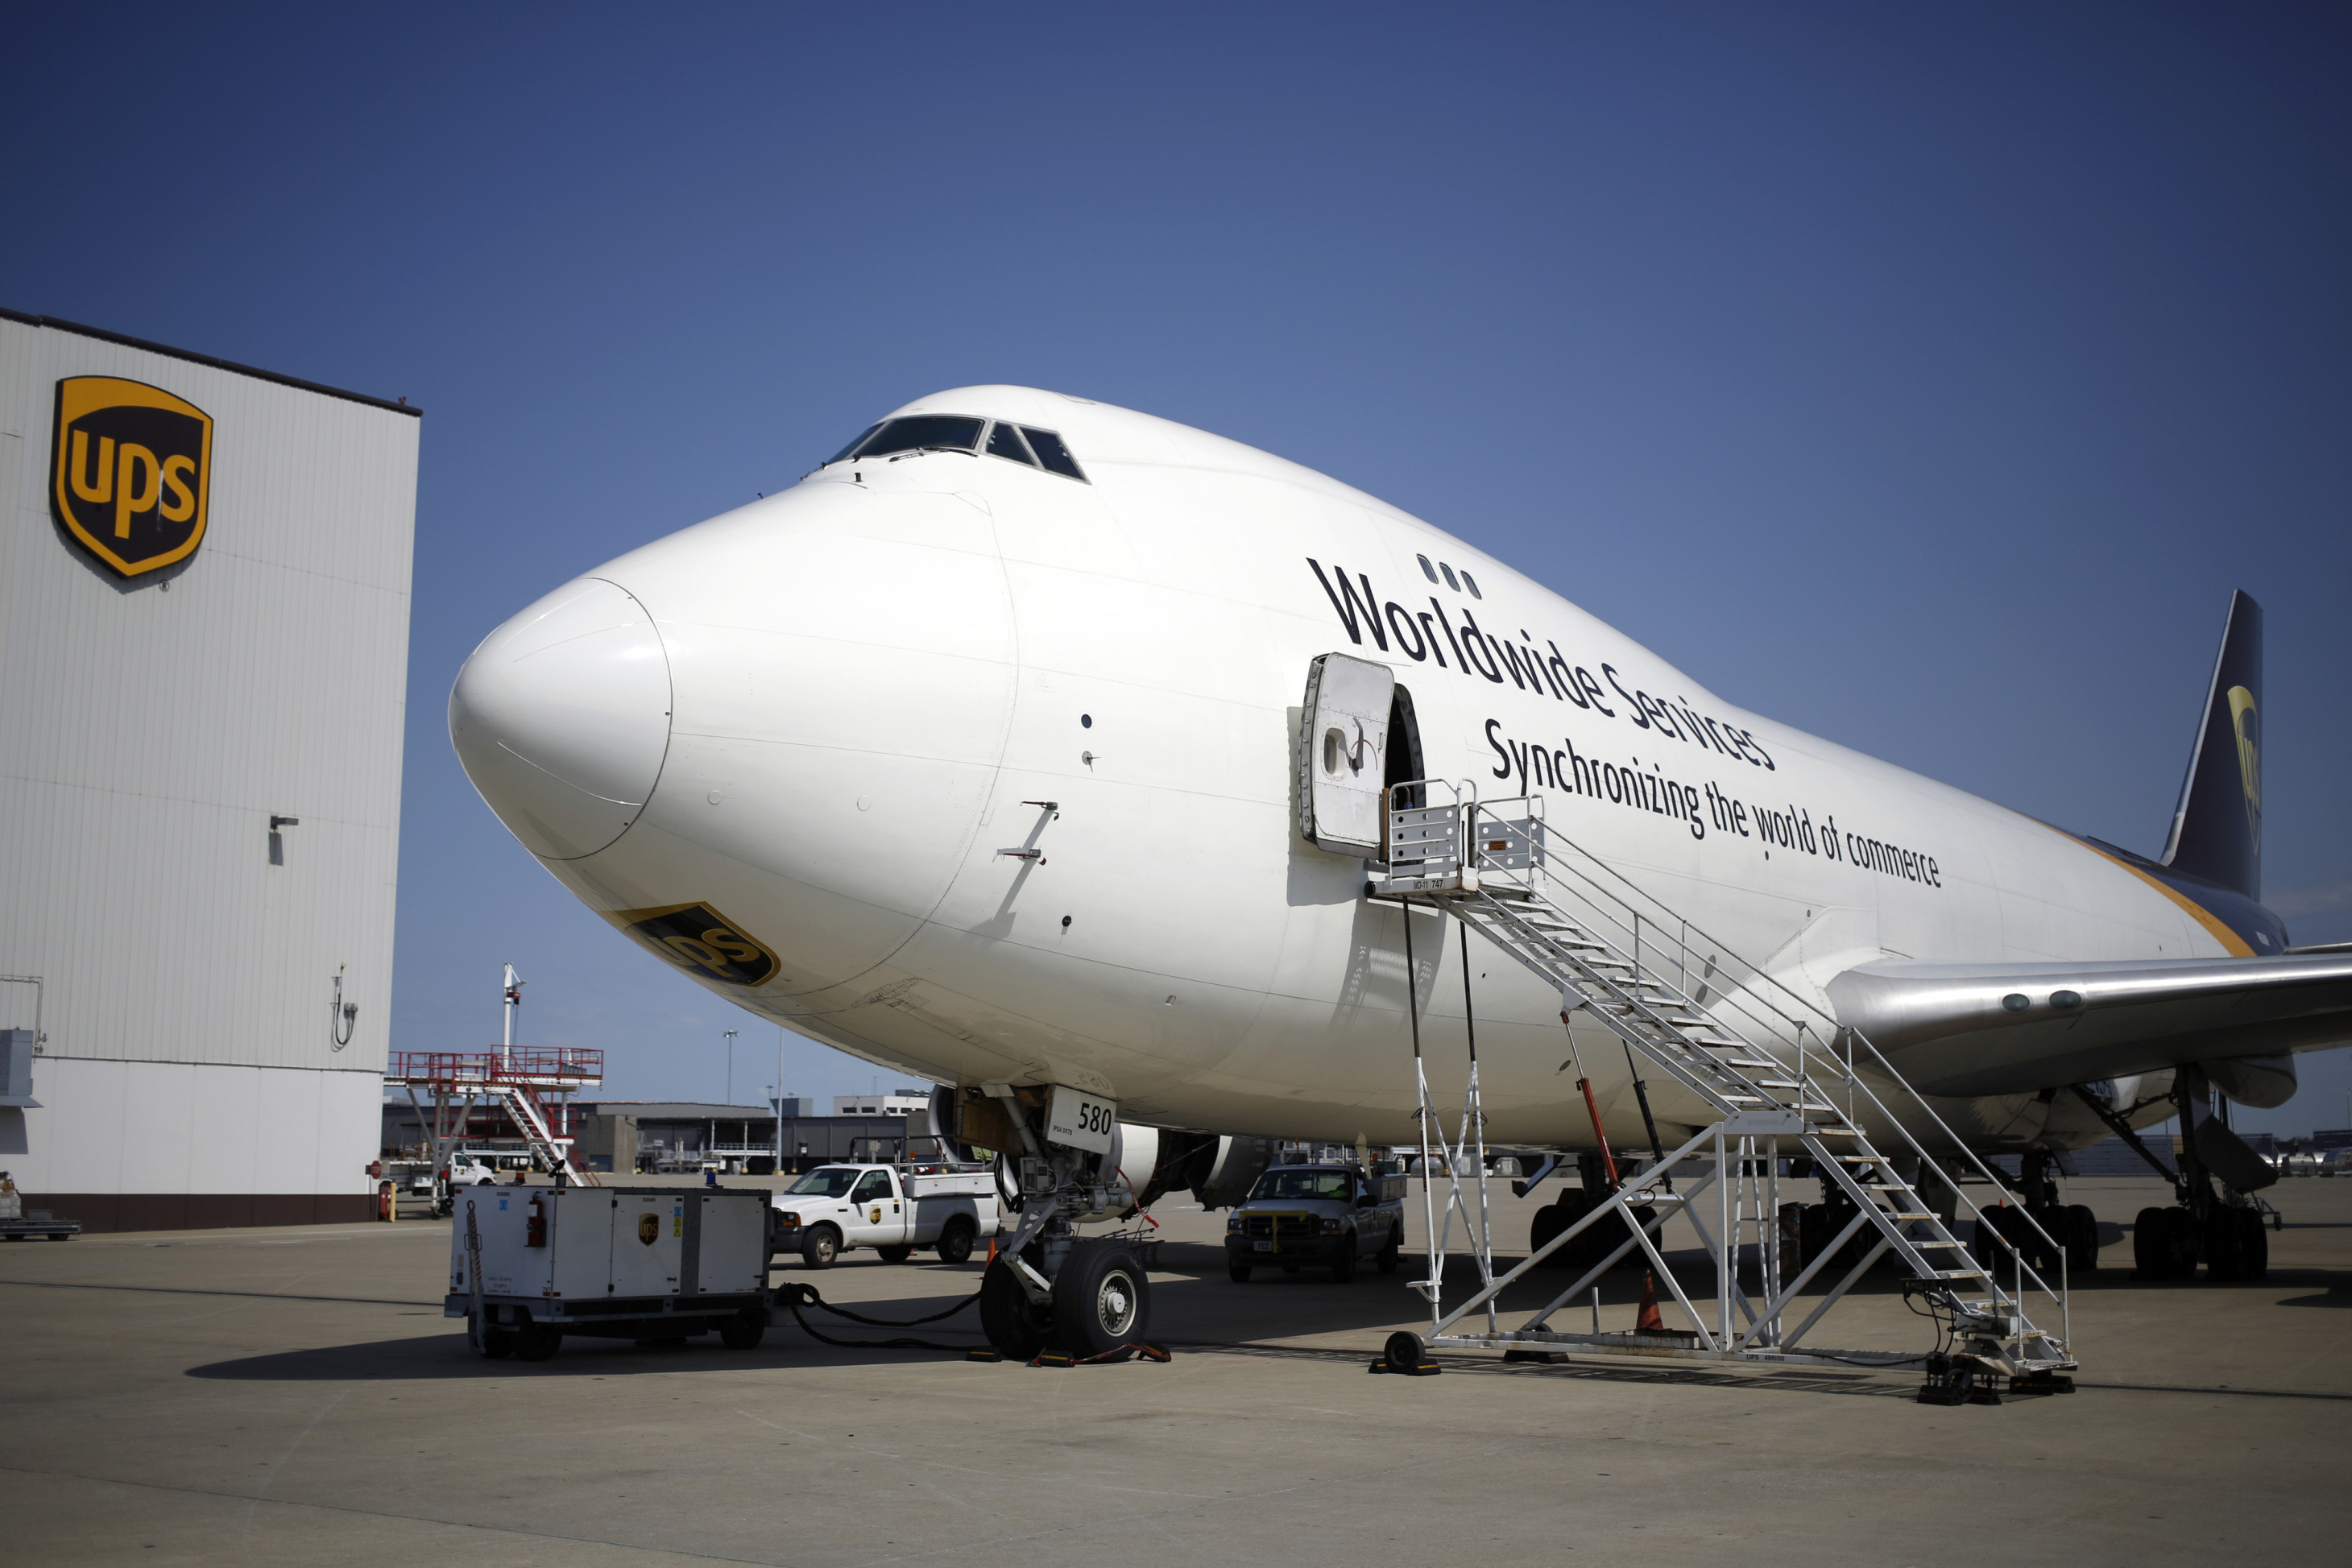 A Boeing 747 cargo jet&nbsp;at the UPS&nbsp;Worldport facility in Louisville, Kentucky.